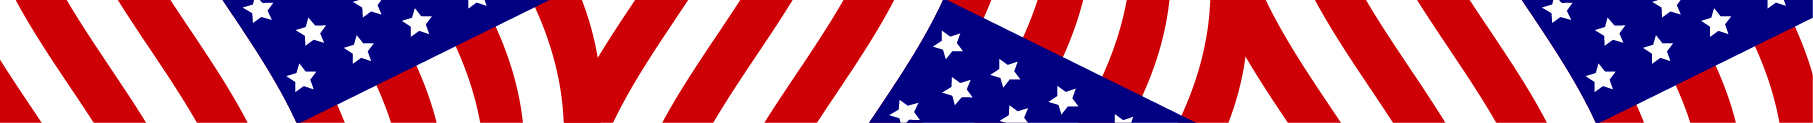 BARD Engine One american flag pattern